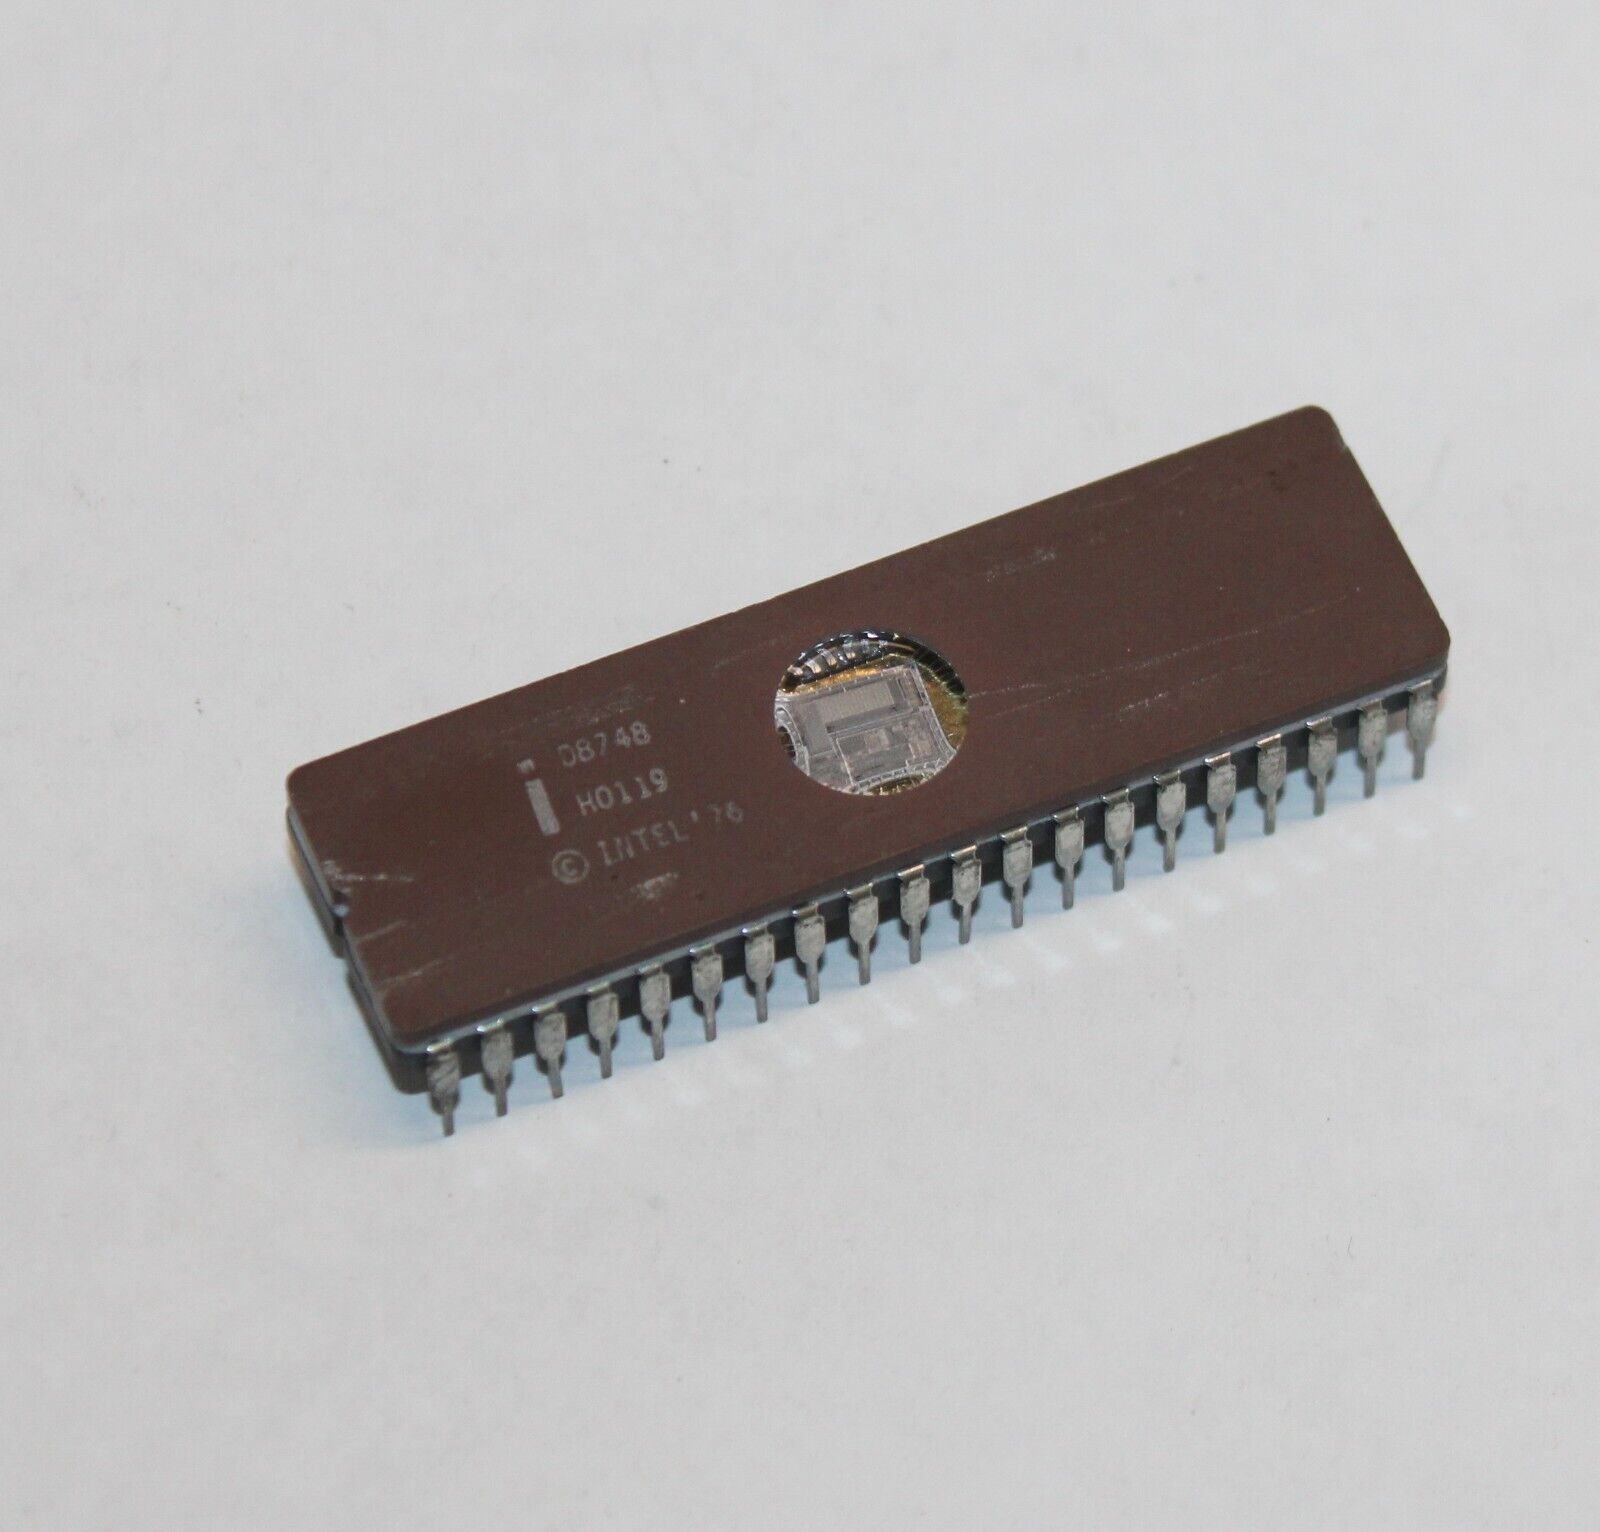 vintage Intel D8748 ceramic MCU Microcontroller CPU IC chip DIP40 8047 works